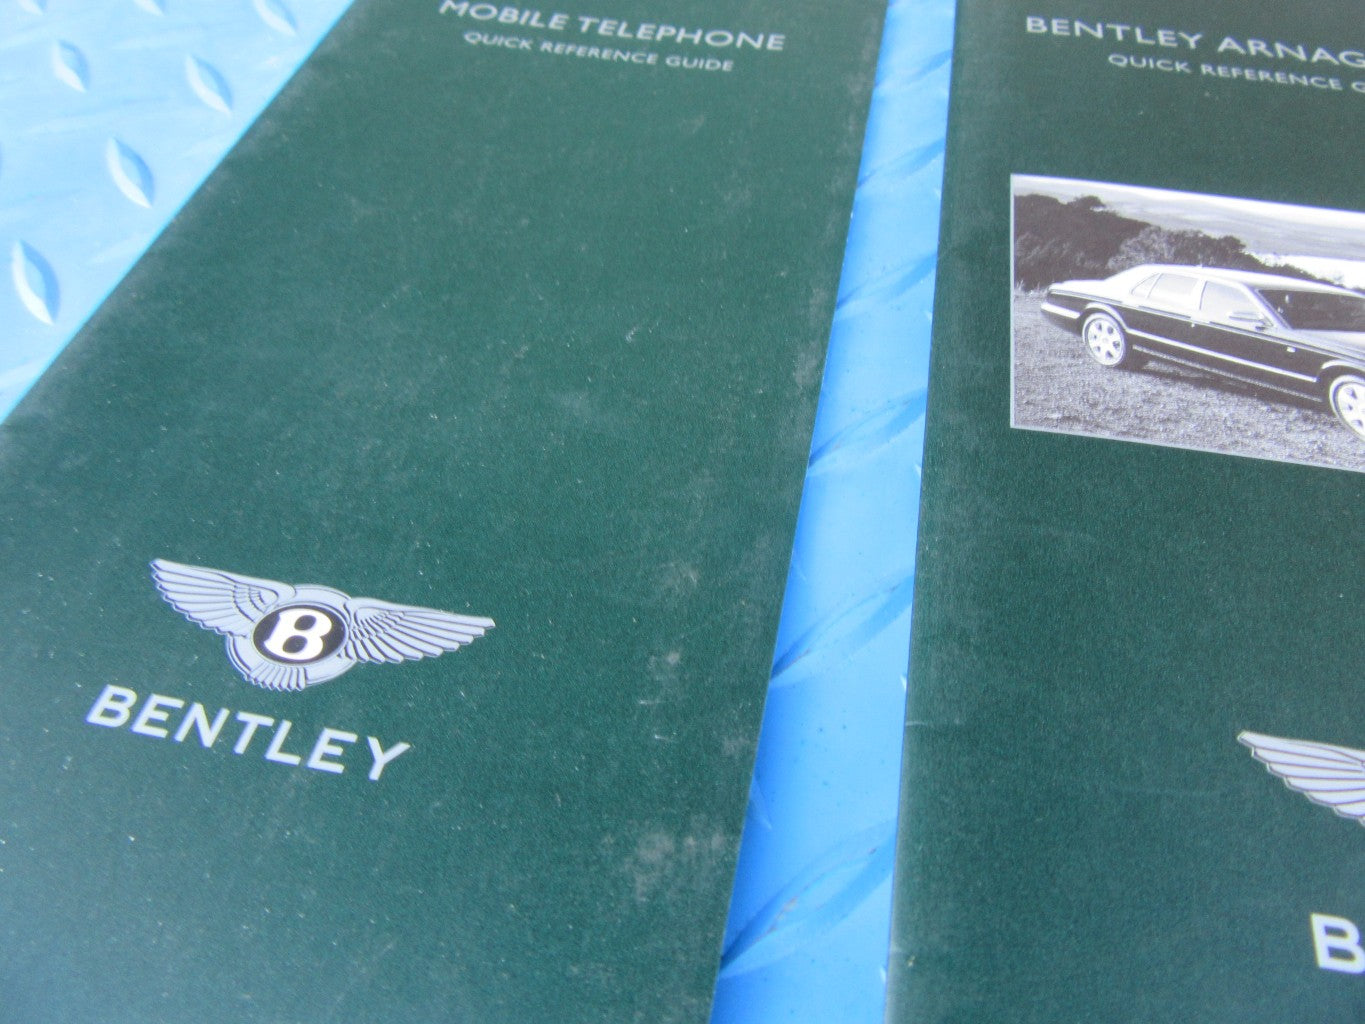 Bentley Arnage R owner's manuals handbooks #0628